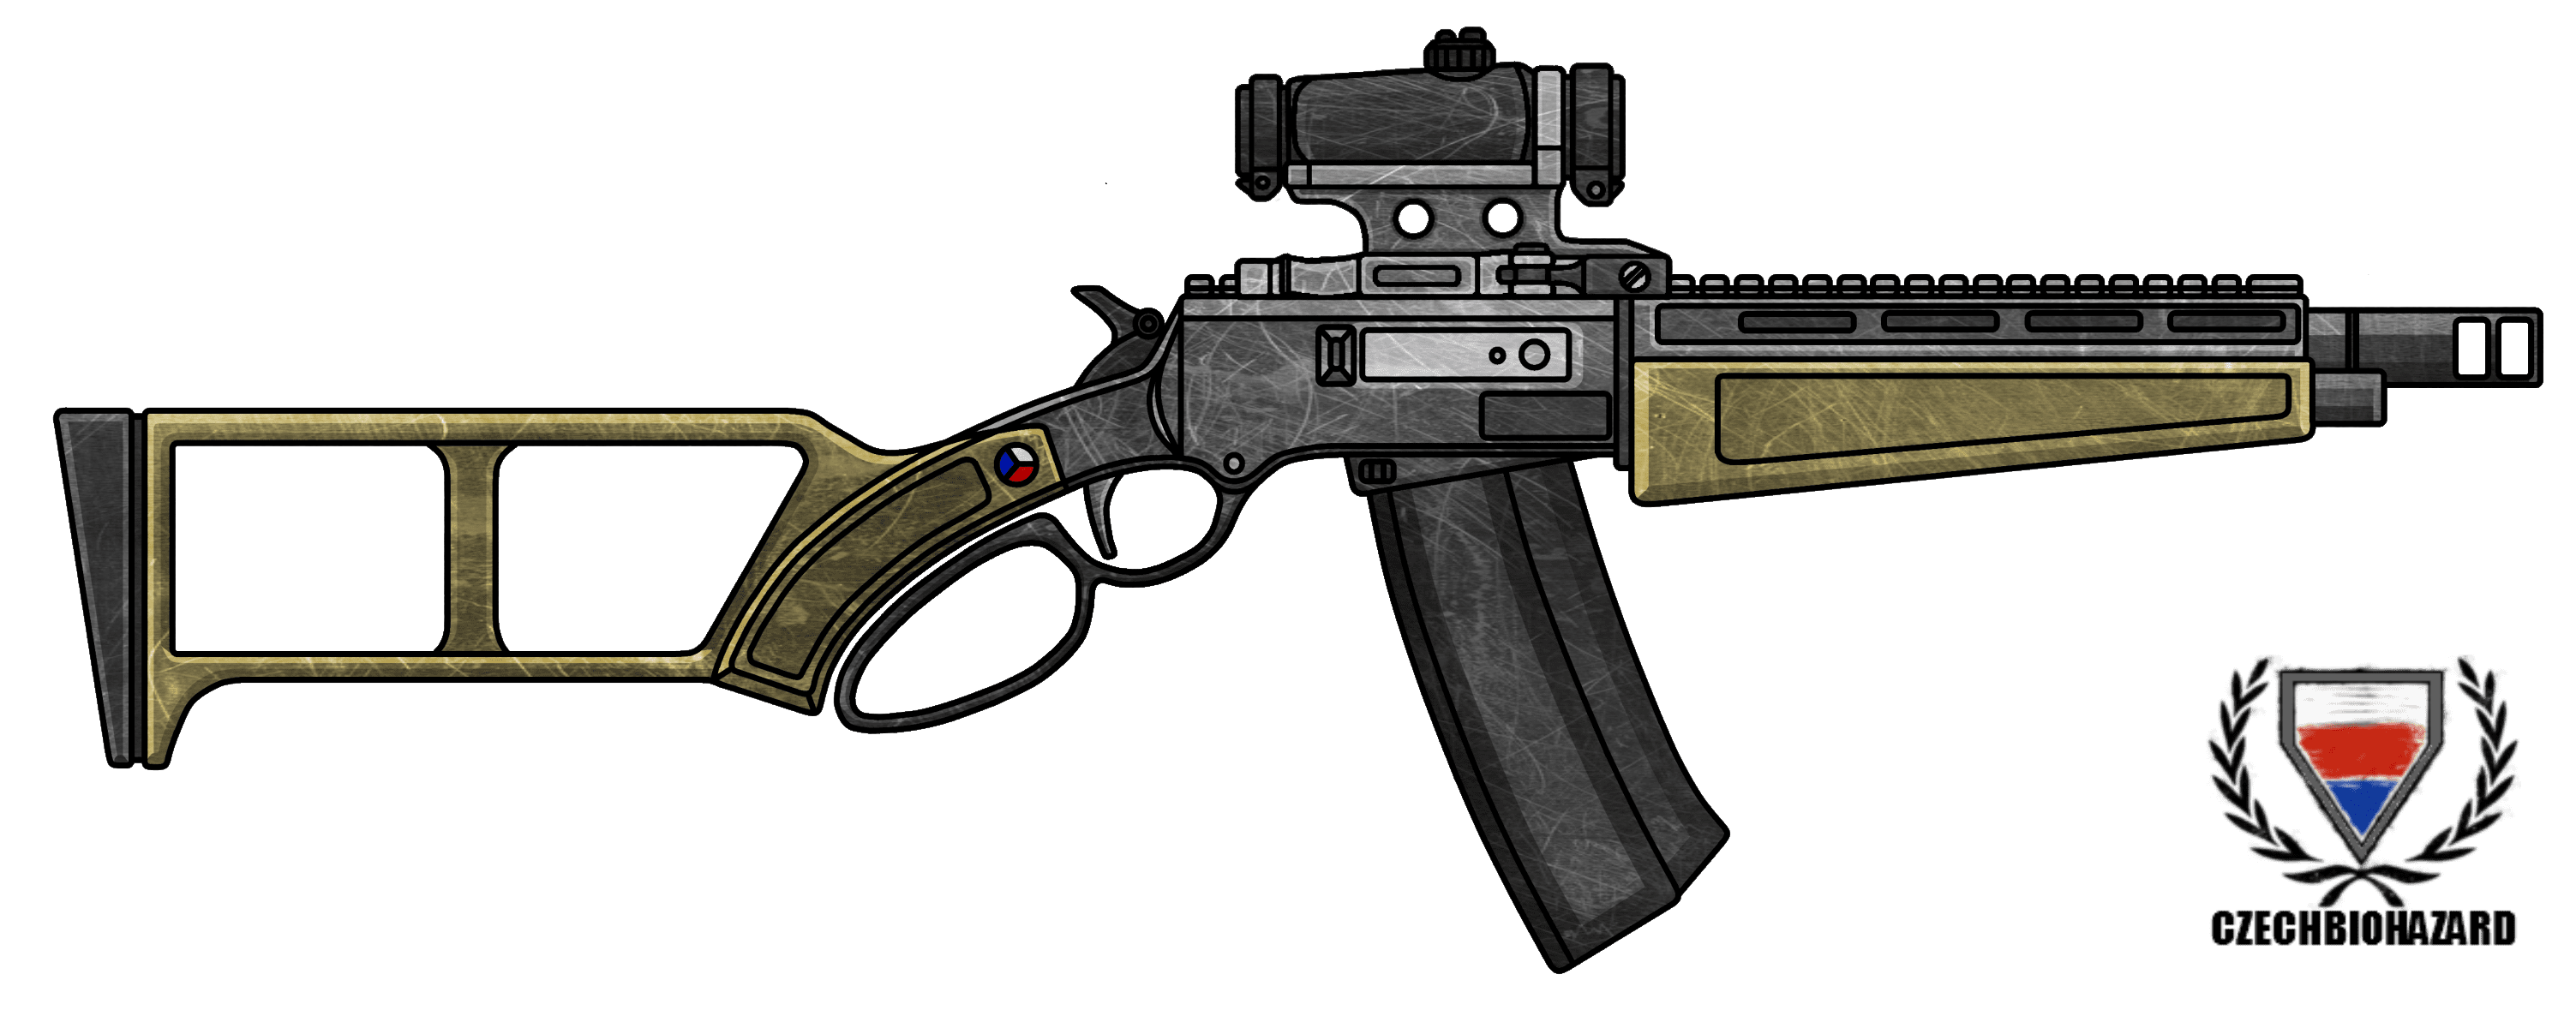 fictional_firearm__hc_308_lever_action_rifle_by_czechbiohazard-d53kgrb.png